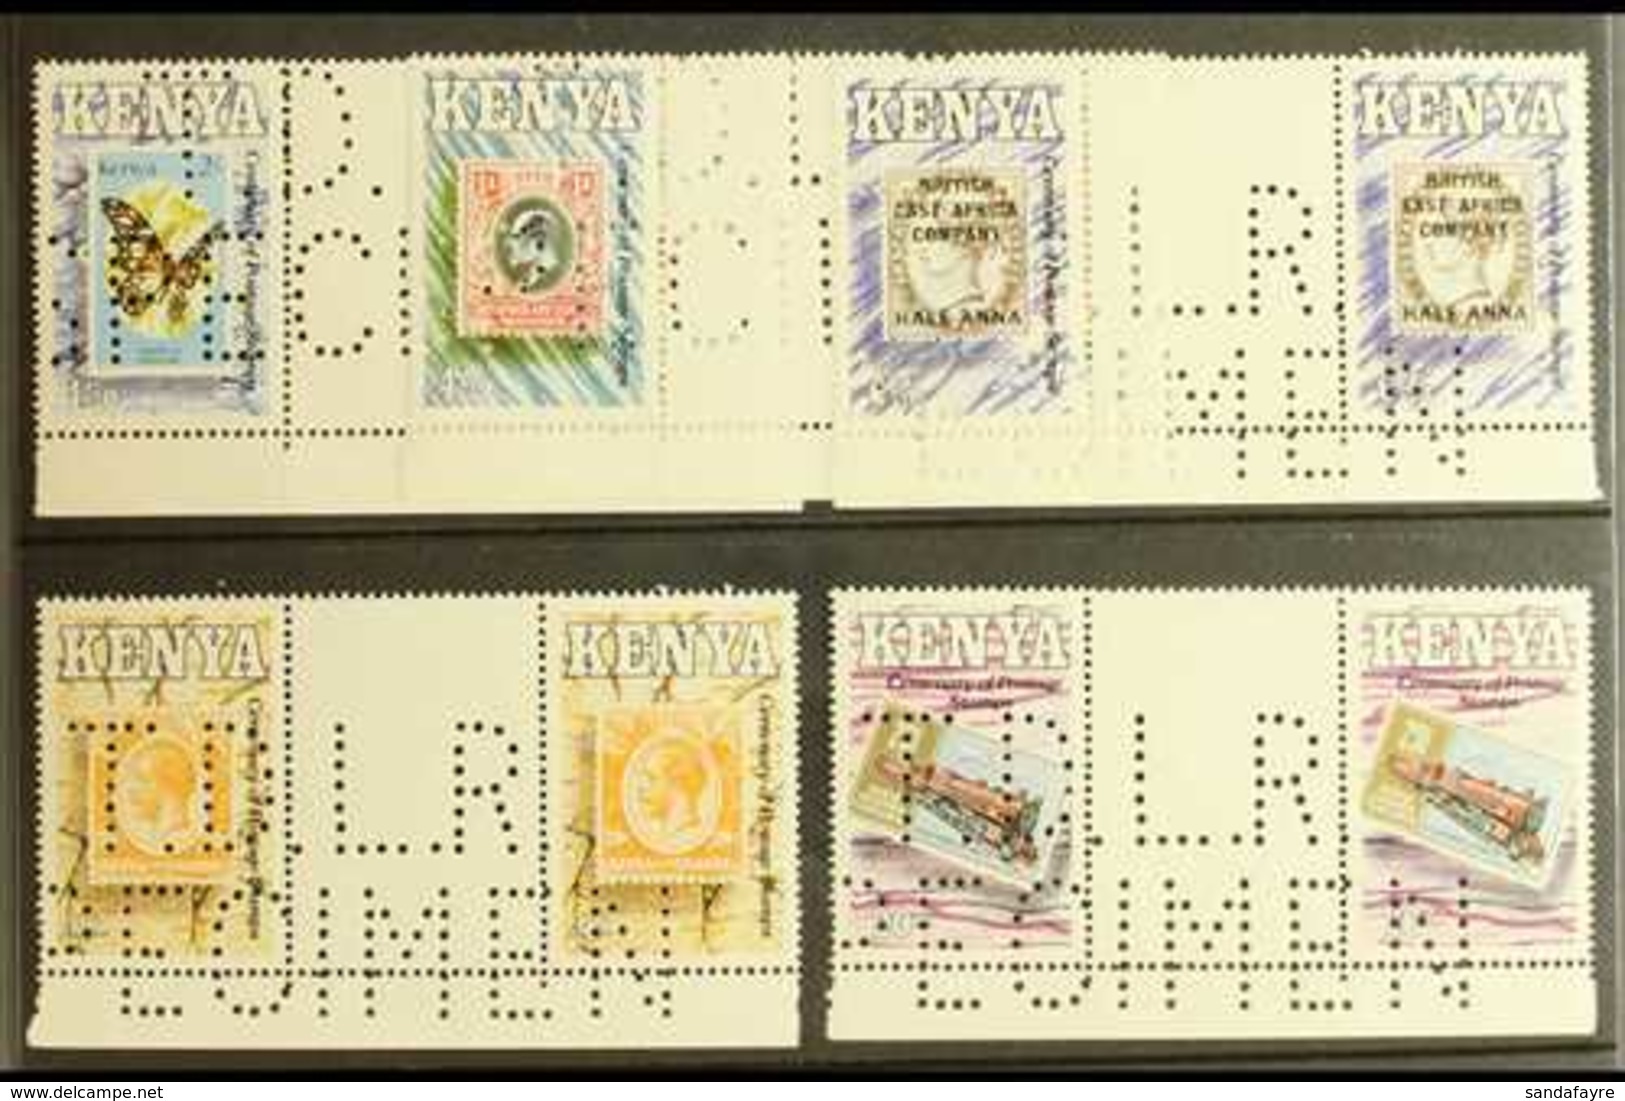 1990 POSTAL CENTENARY - DLR SPECIMENS Centenary Of Postage Stamps In Kenya Set (SG 547/51) In Never Hinged Mint Gutter P - Kenia (1963-...)